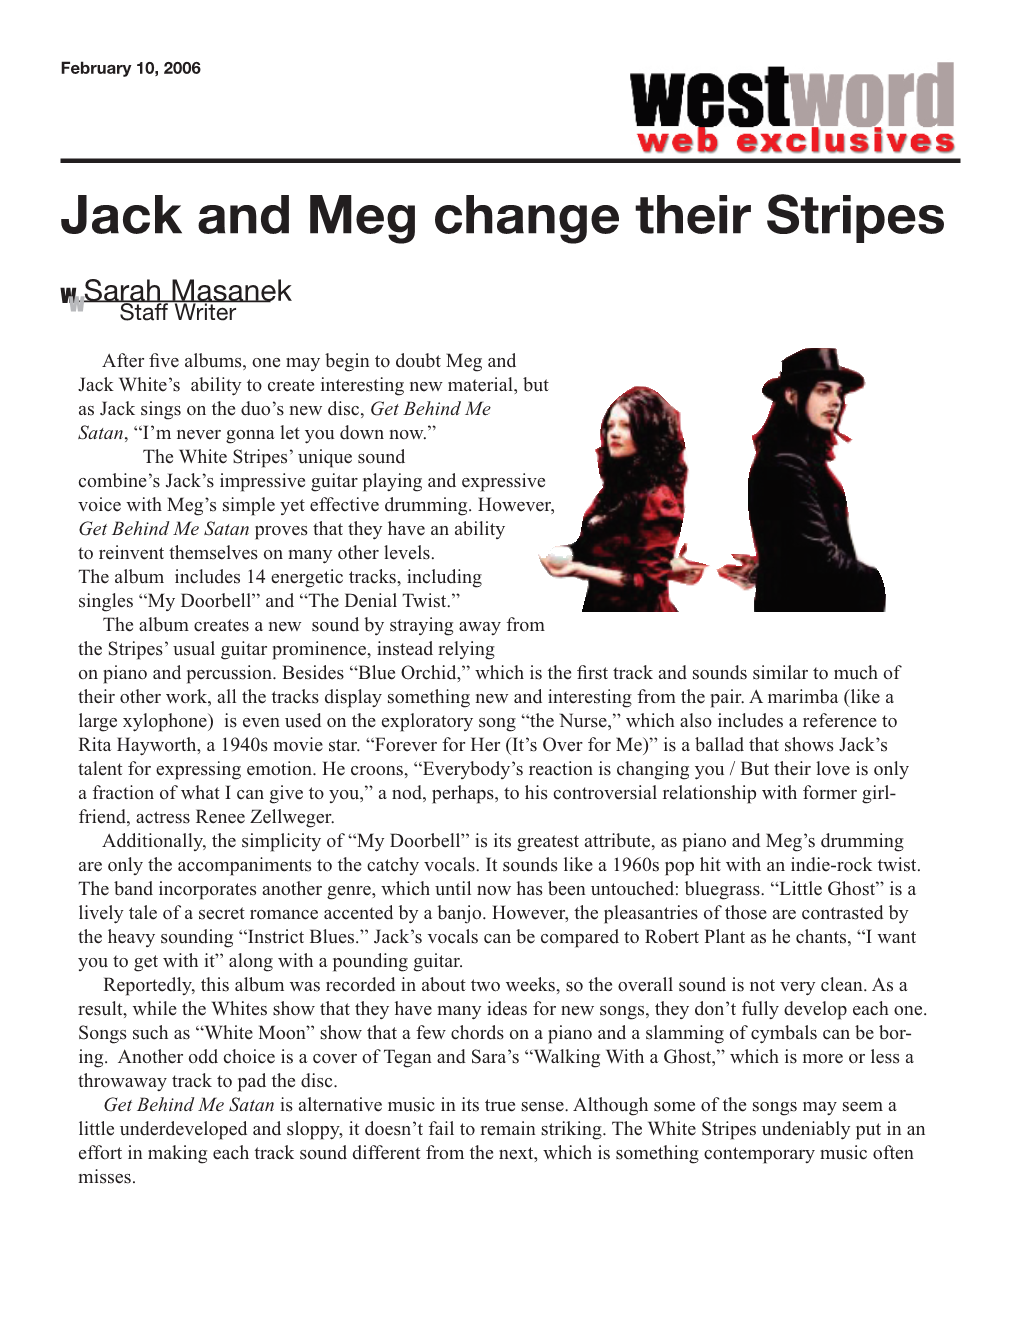 Jack and Meg Change Their Stripes W Sarah Masanek W Staff Writer